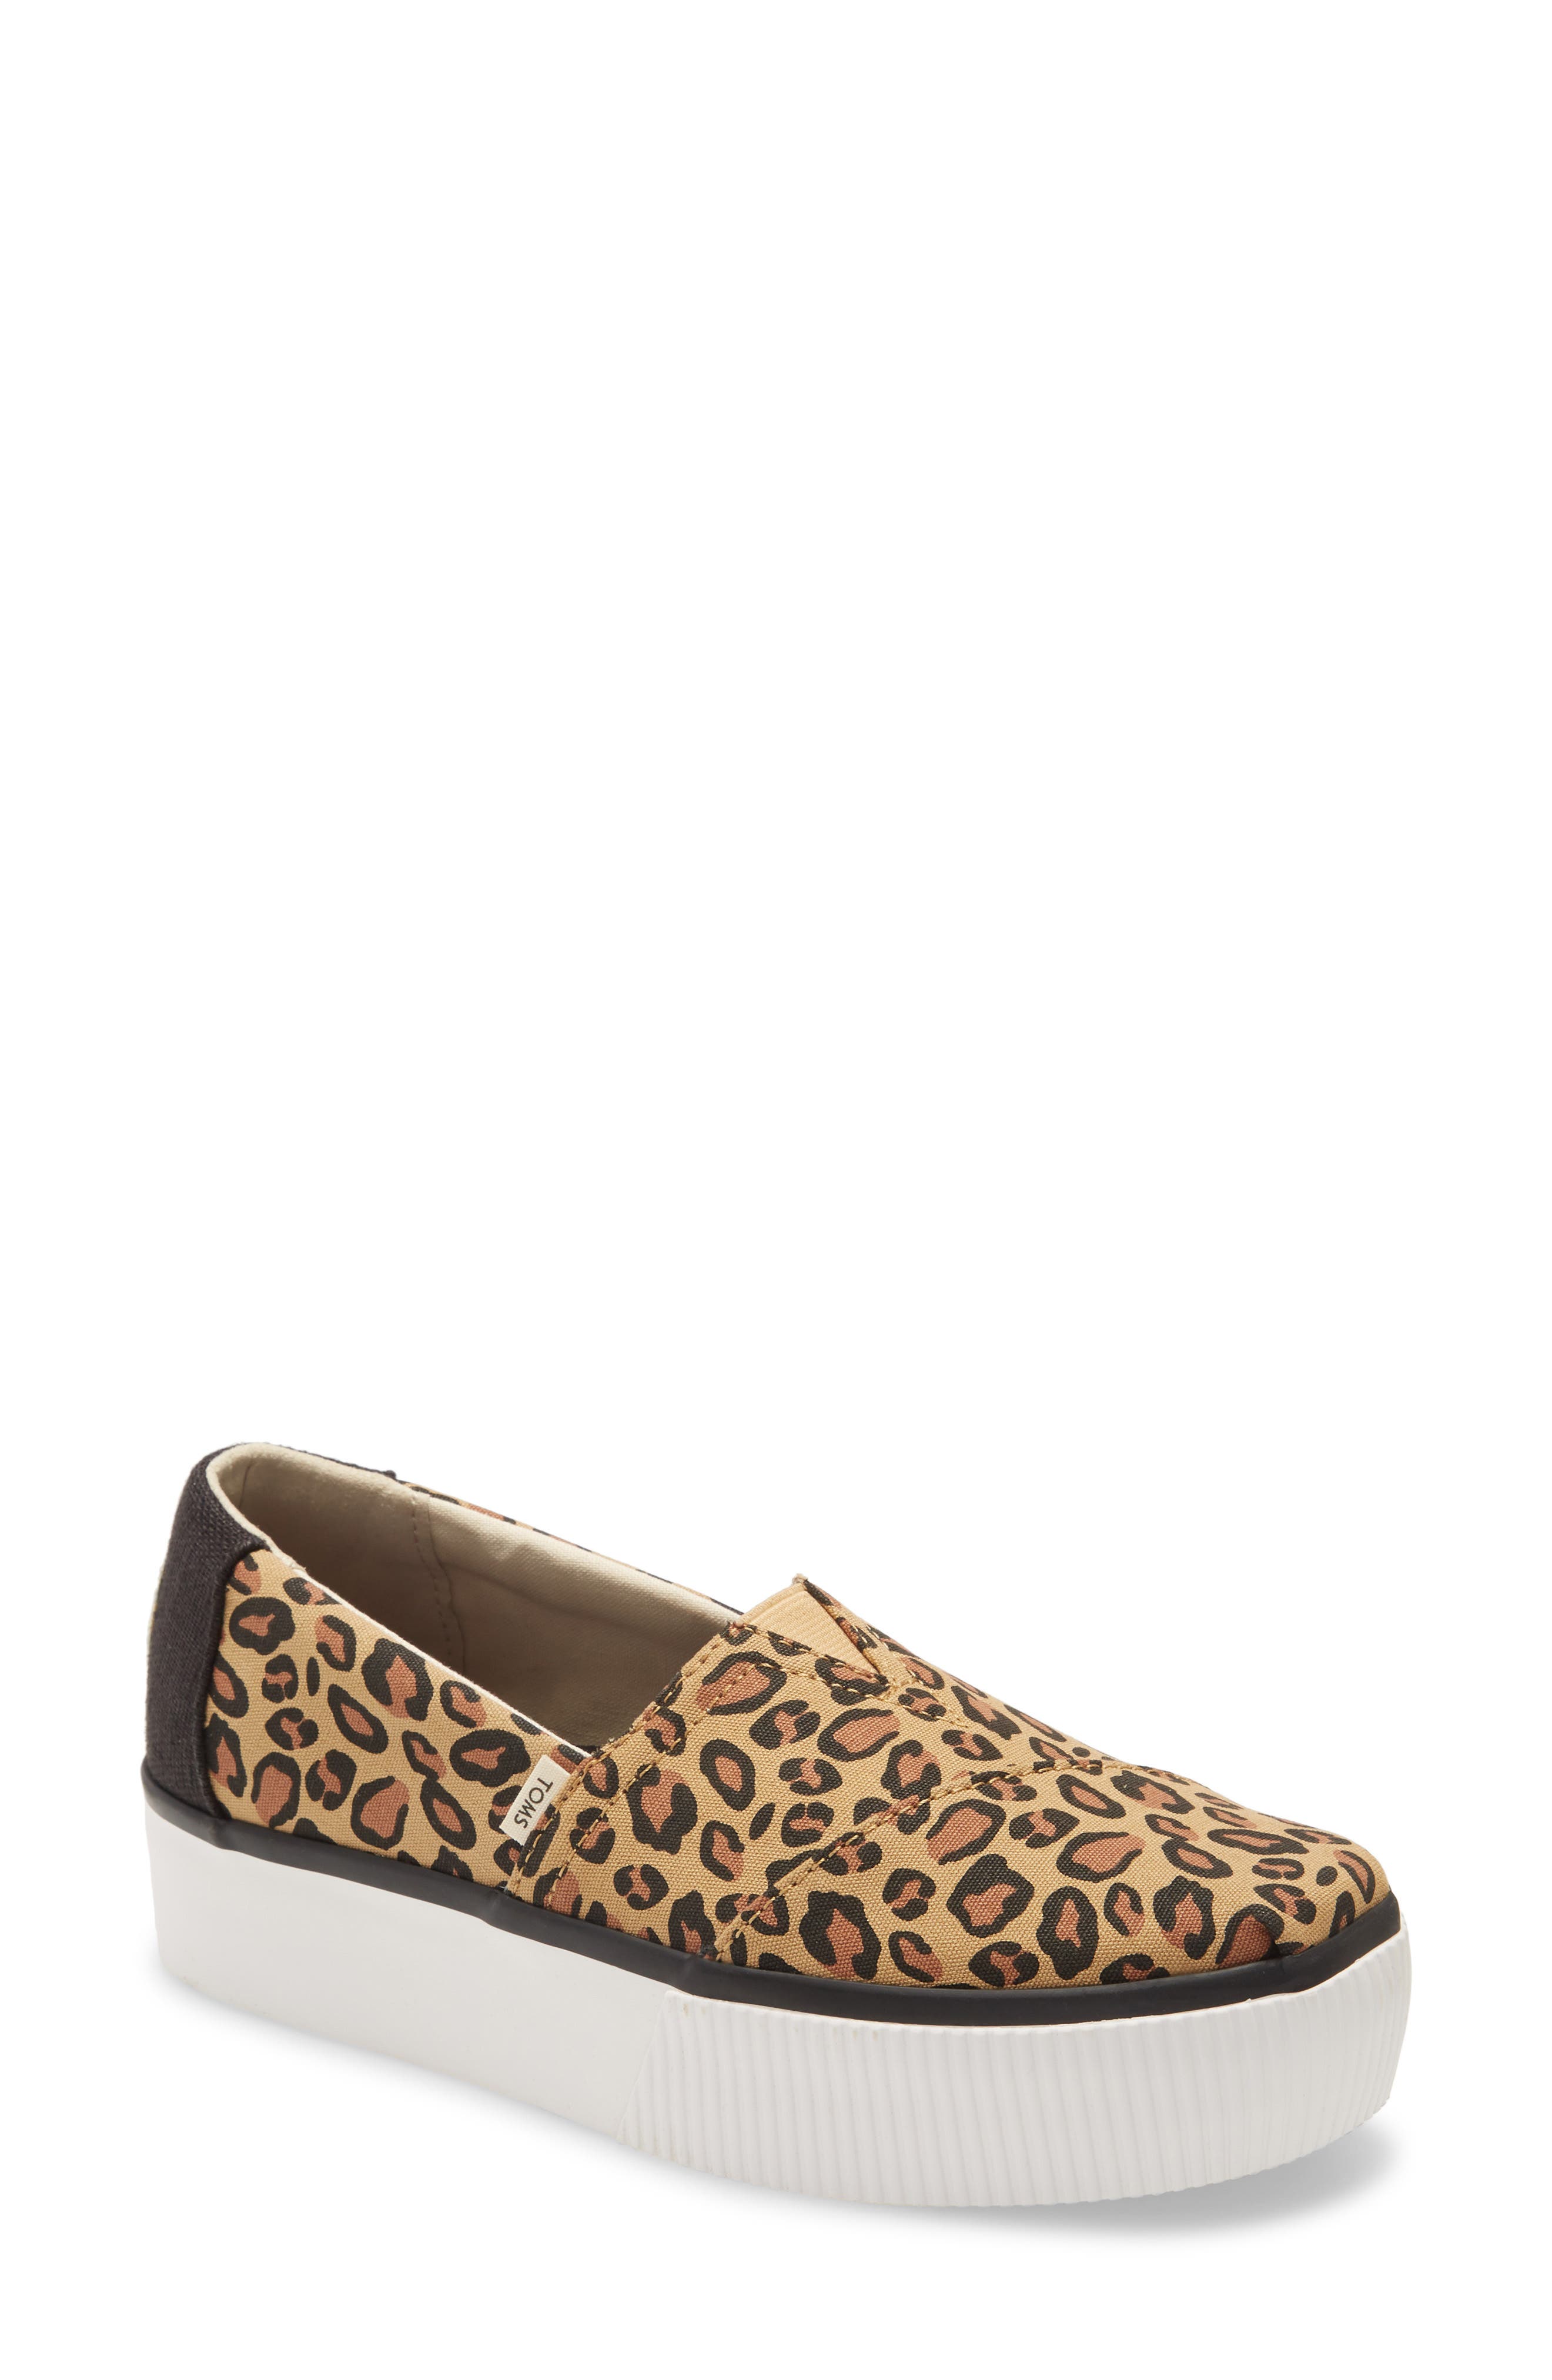 toms leopard sneakers